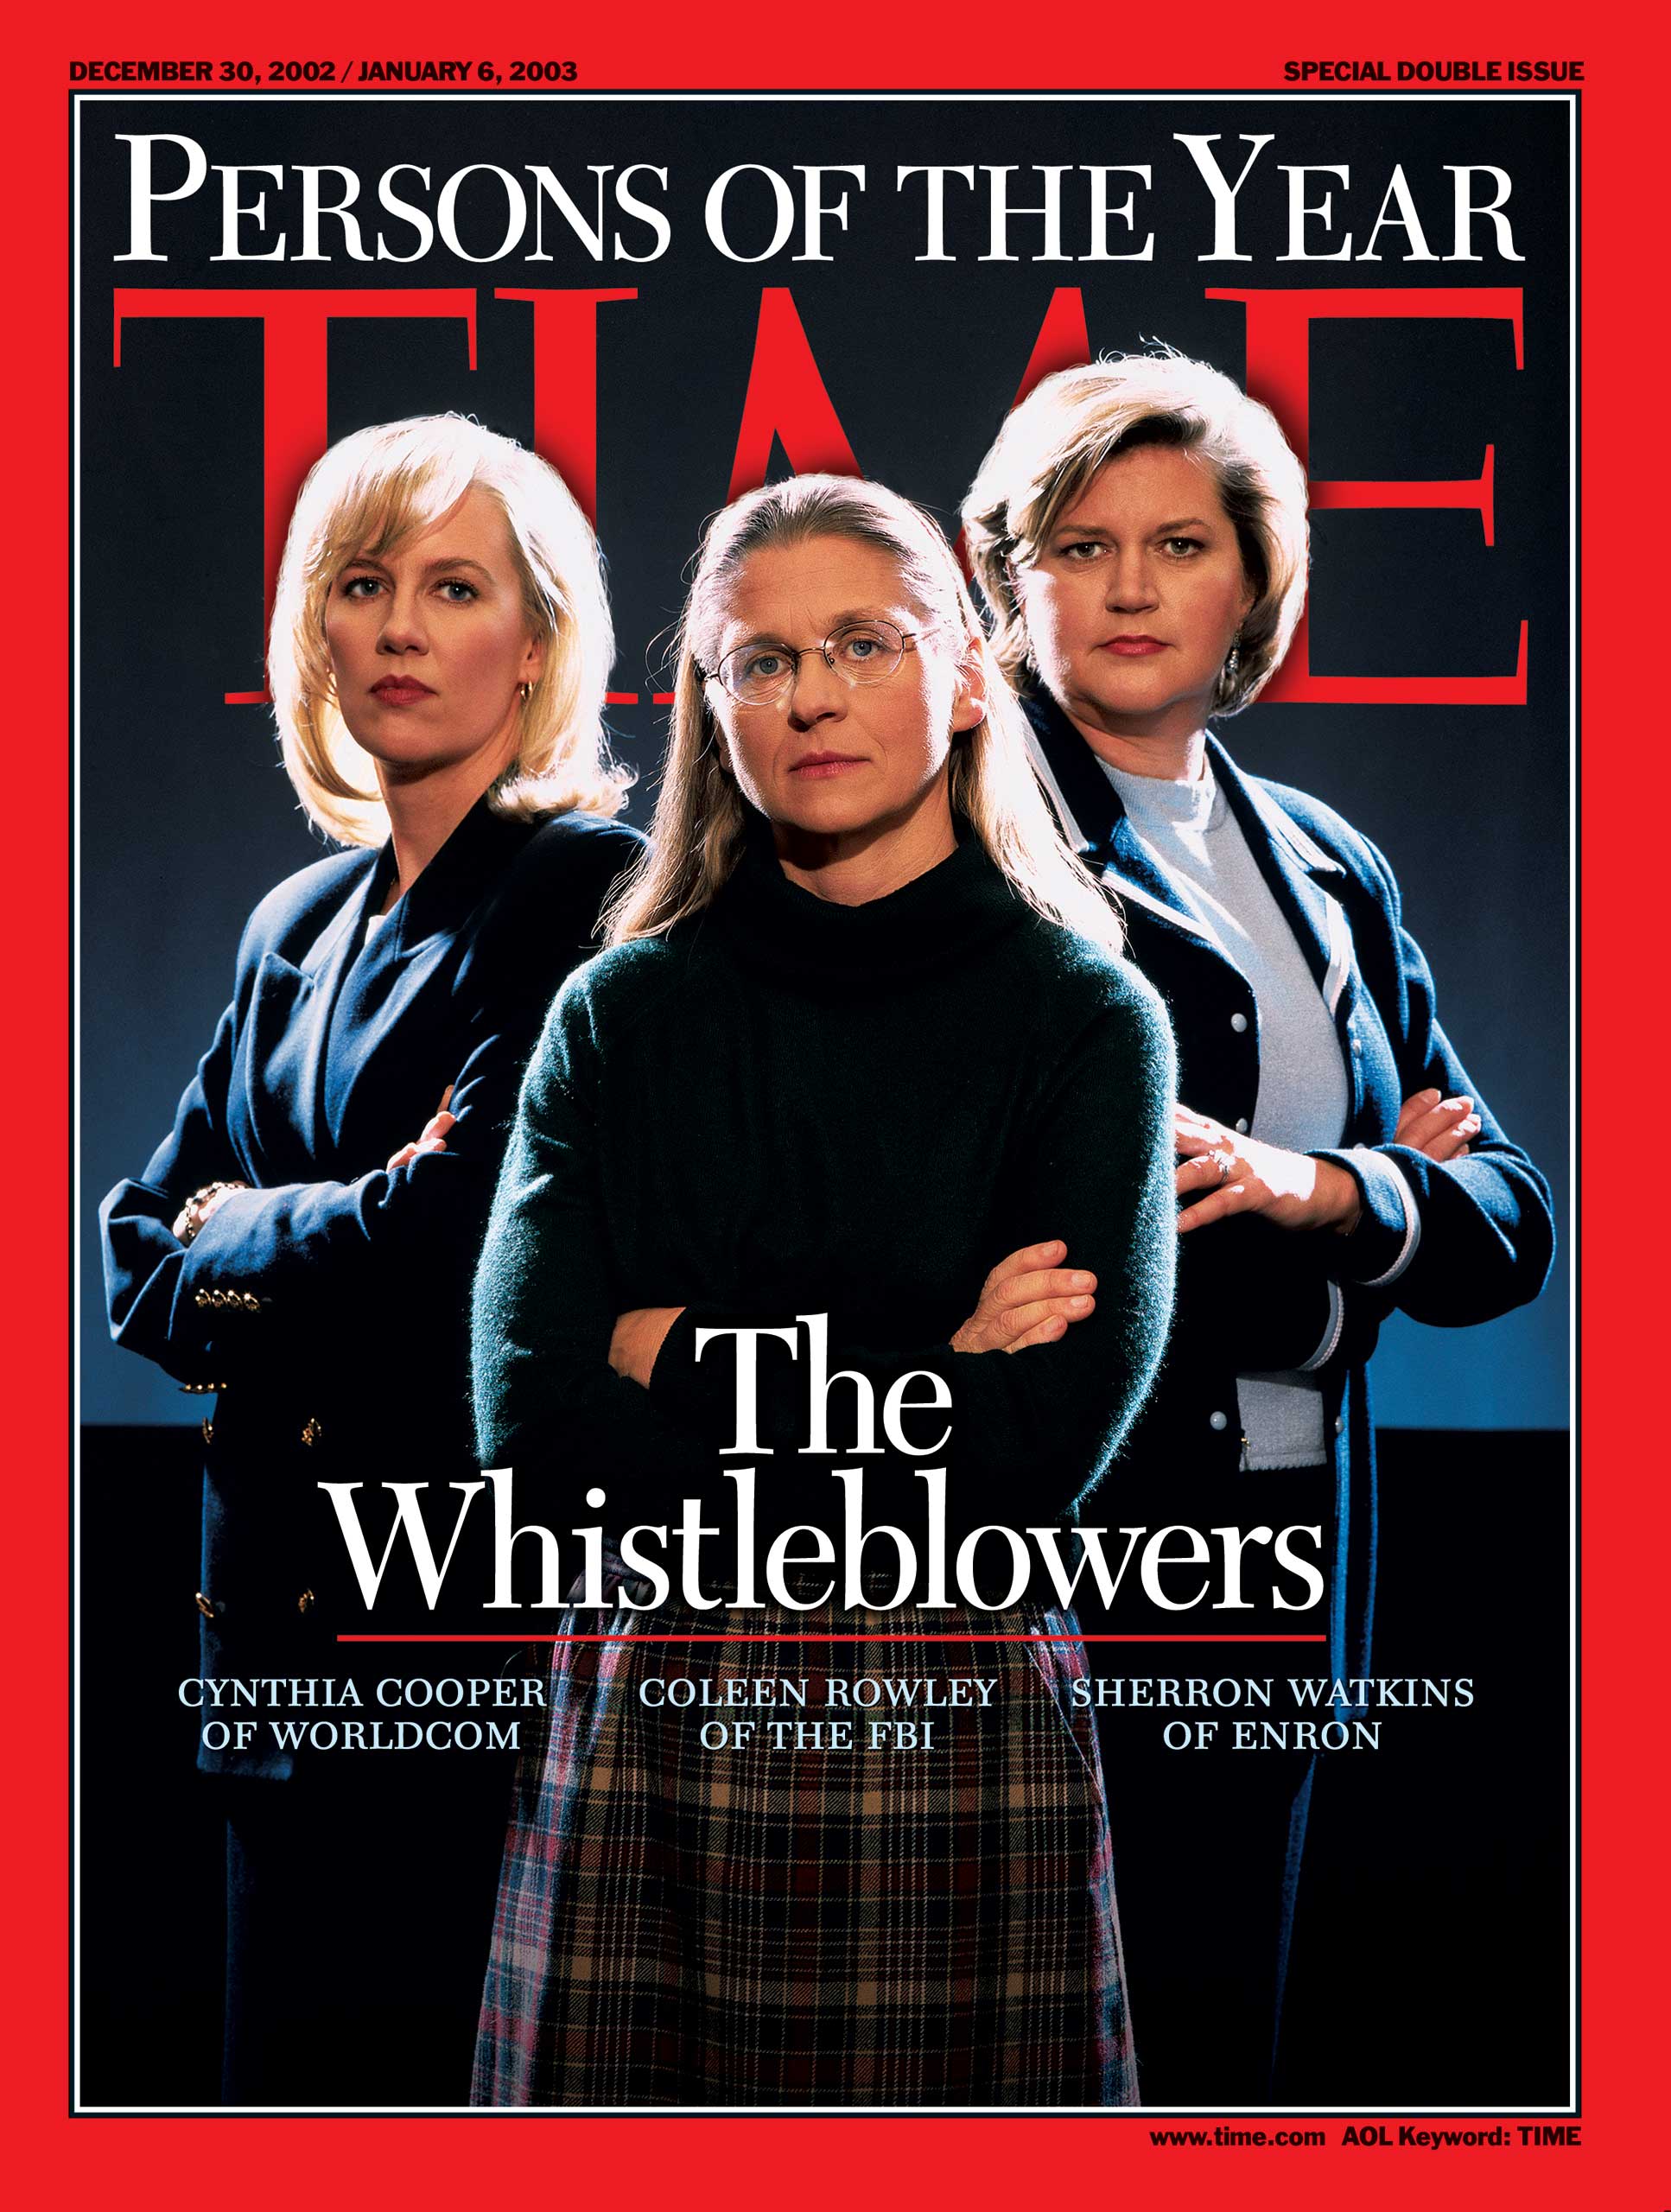 2002: The Whistleblowers